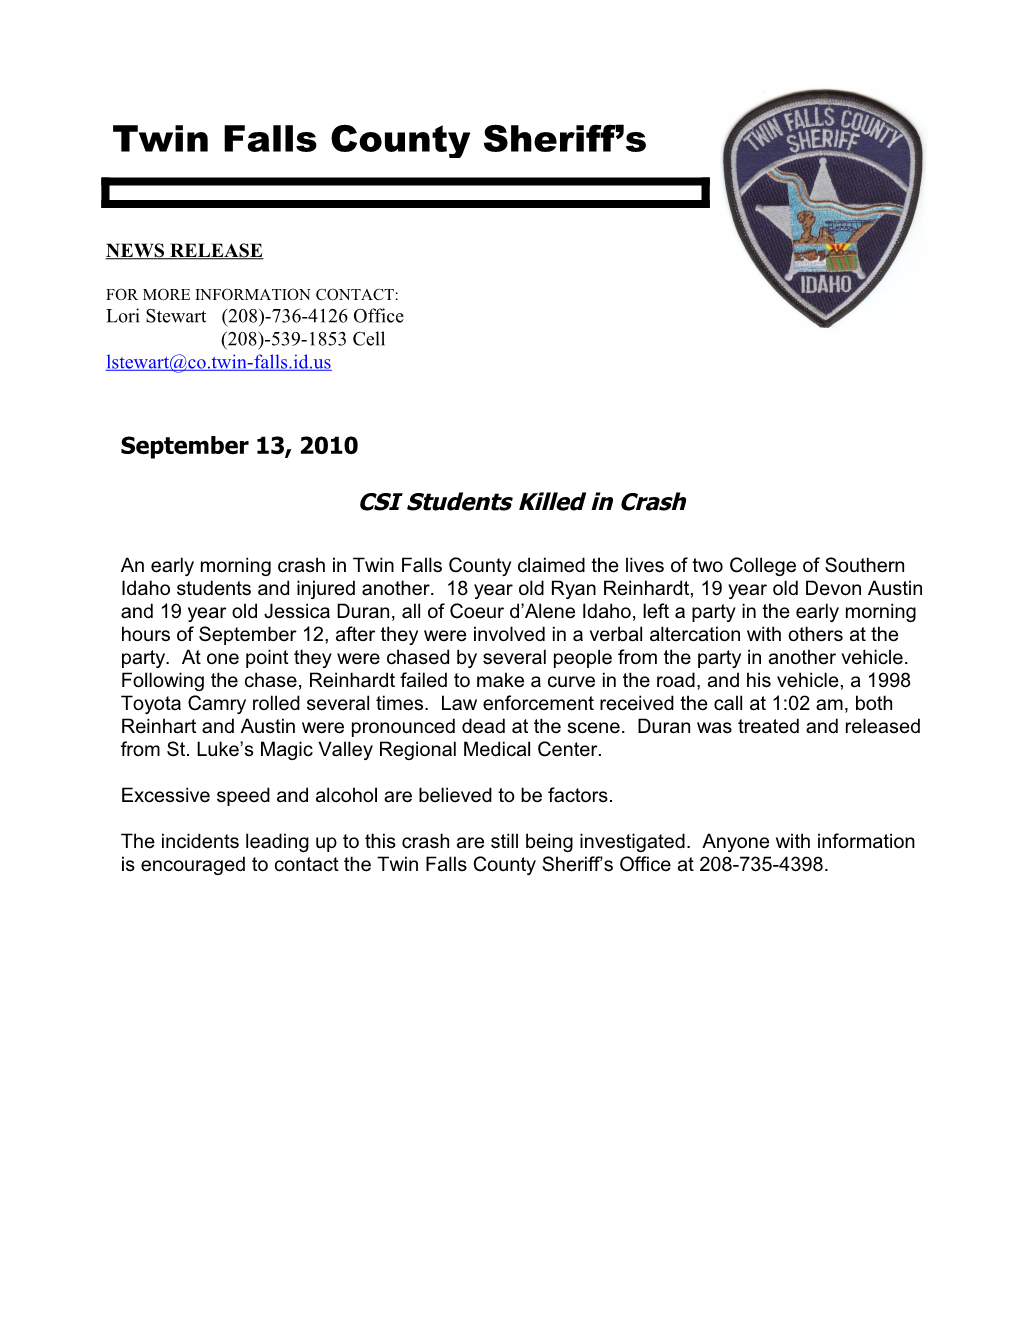 CSI Students Killed in Crash